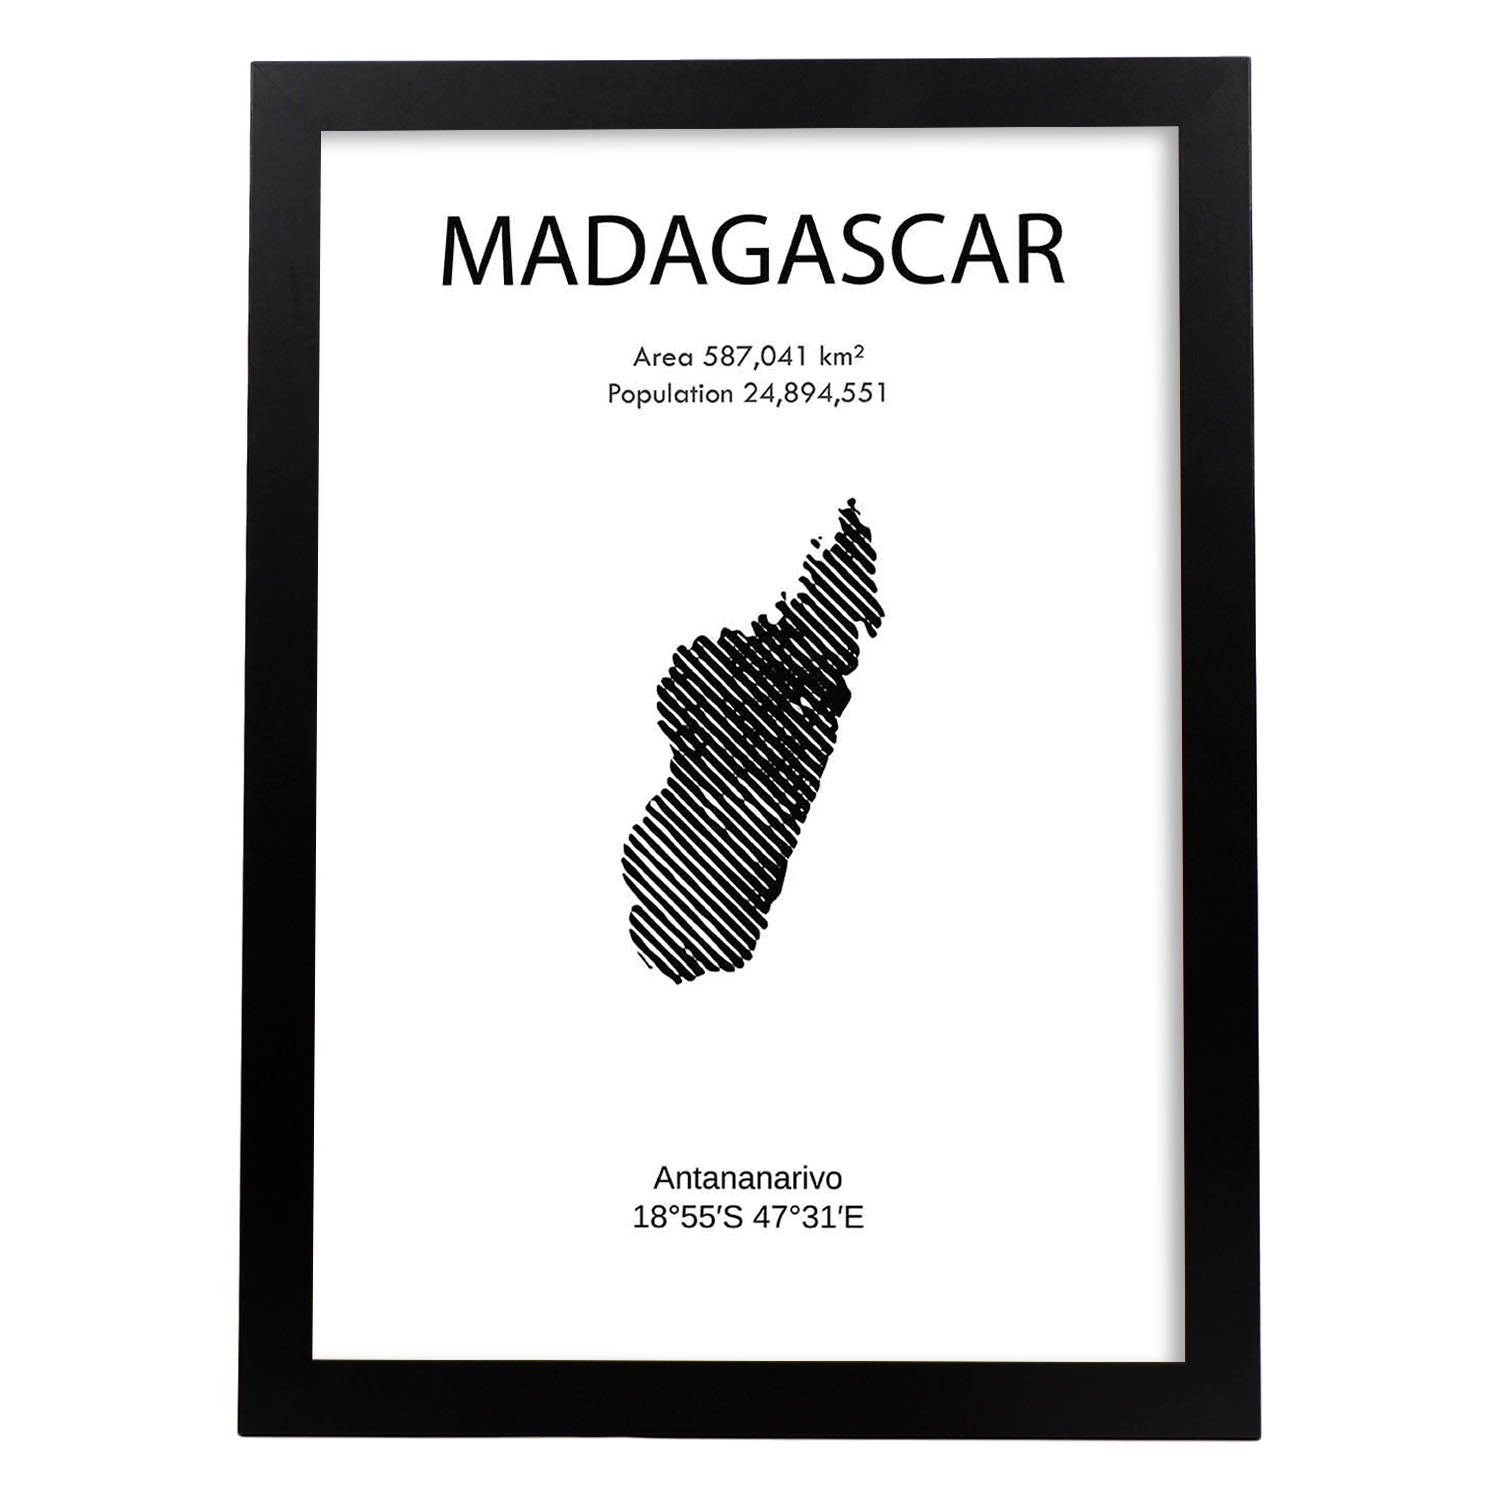 Poster de Madagascar. Láminas de paises y continentes del mundo.-Artwork-Nacnic-A4-Marco Negro-Nacnic Estudio SL